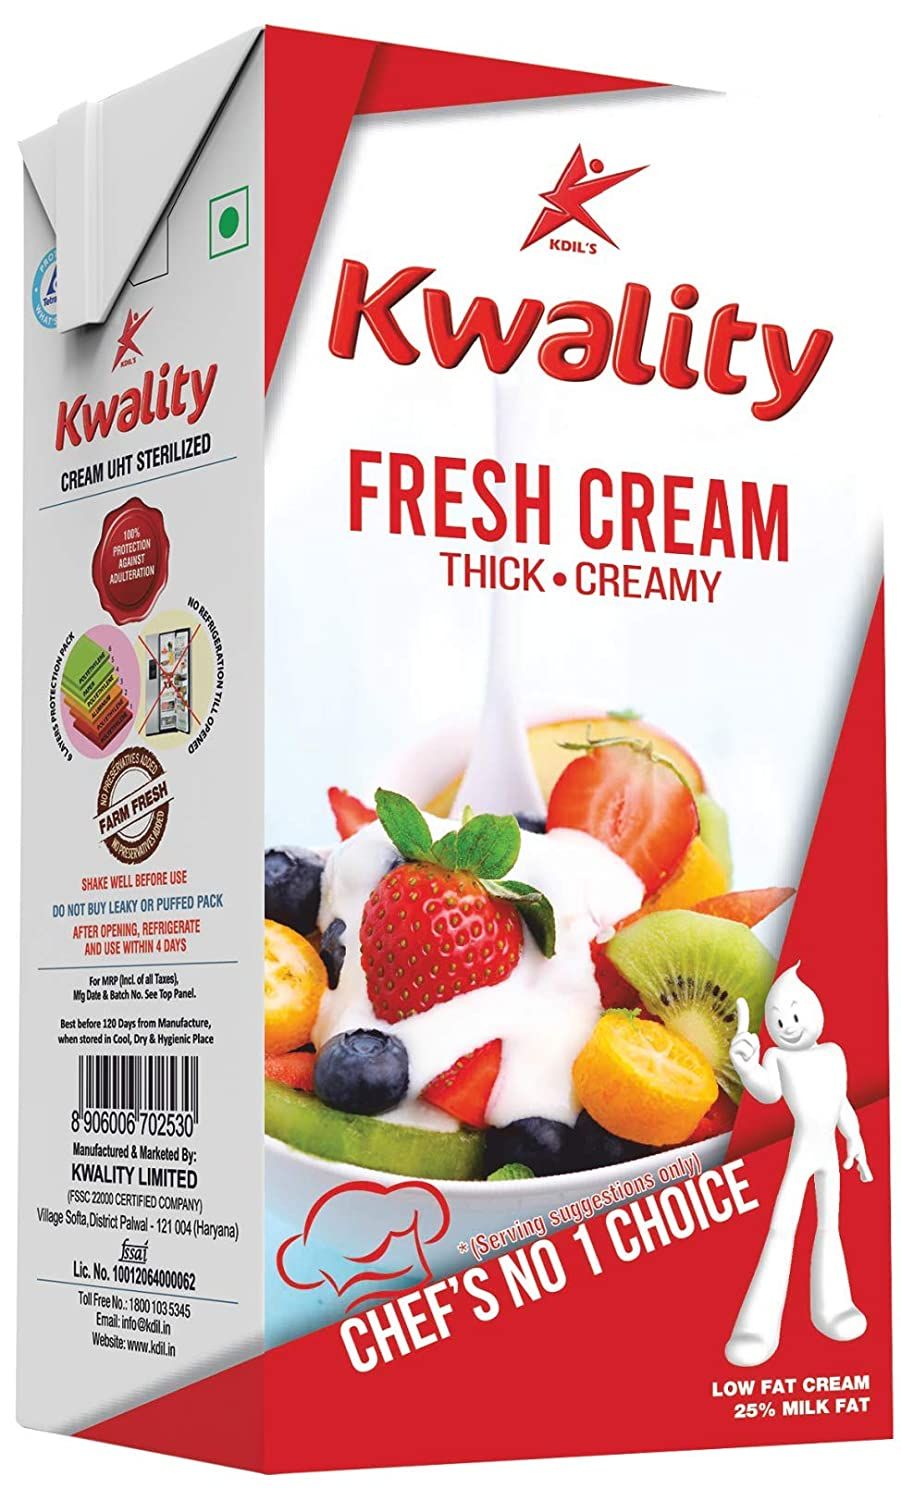 Kwality Fresh Cream Image